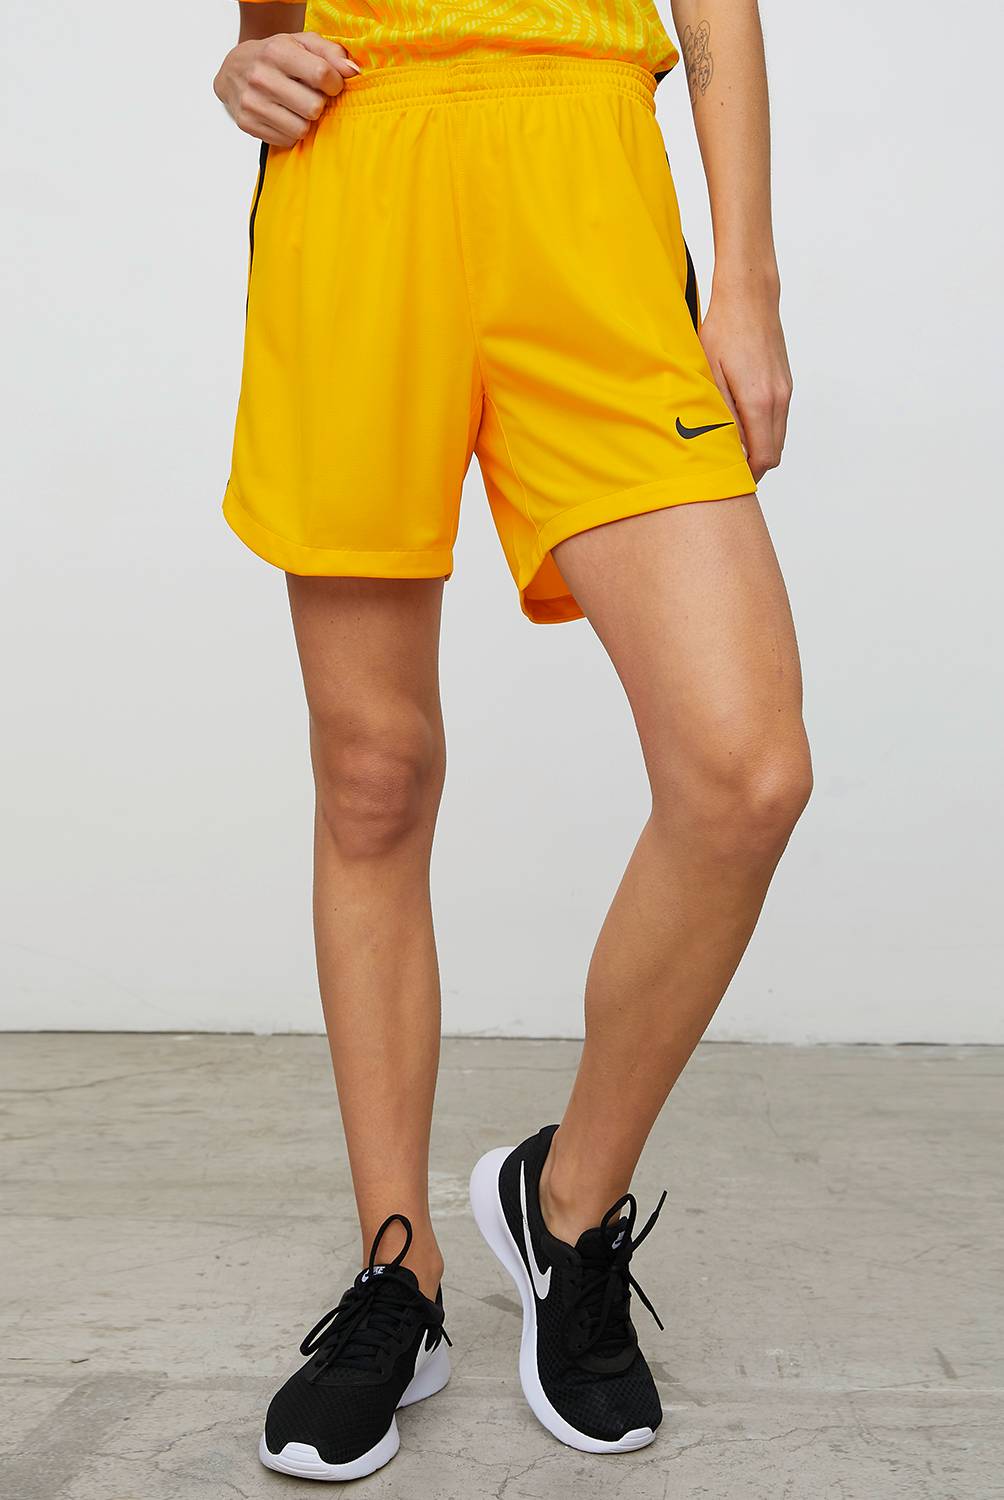 NIKE - Nike Shorts Deportivo Fútbol Mujer